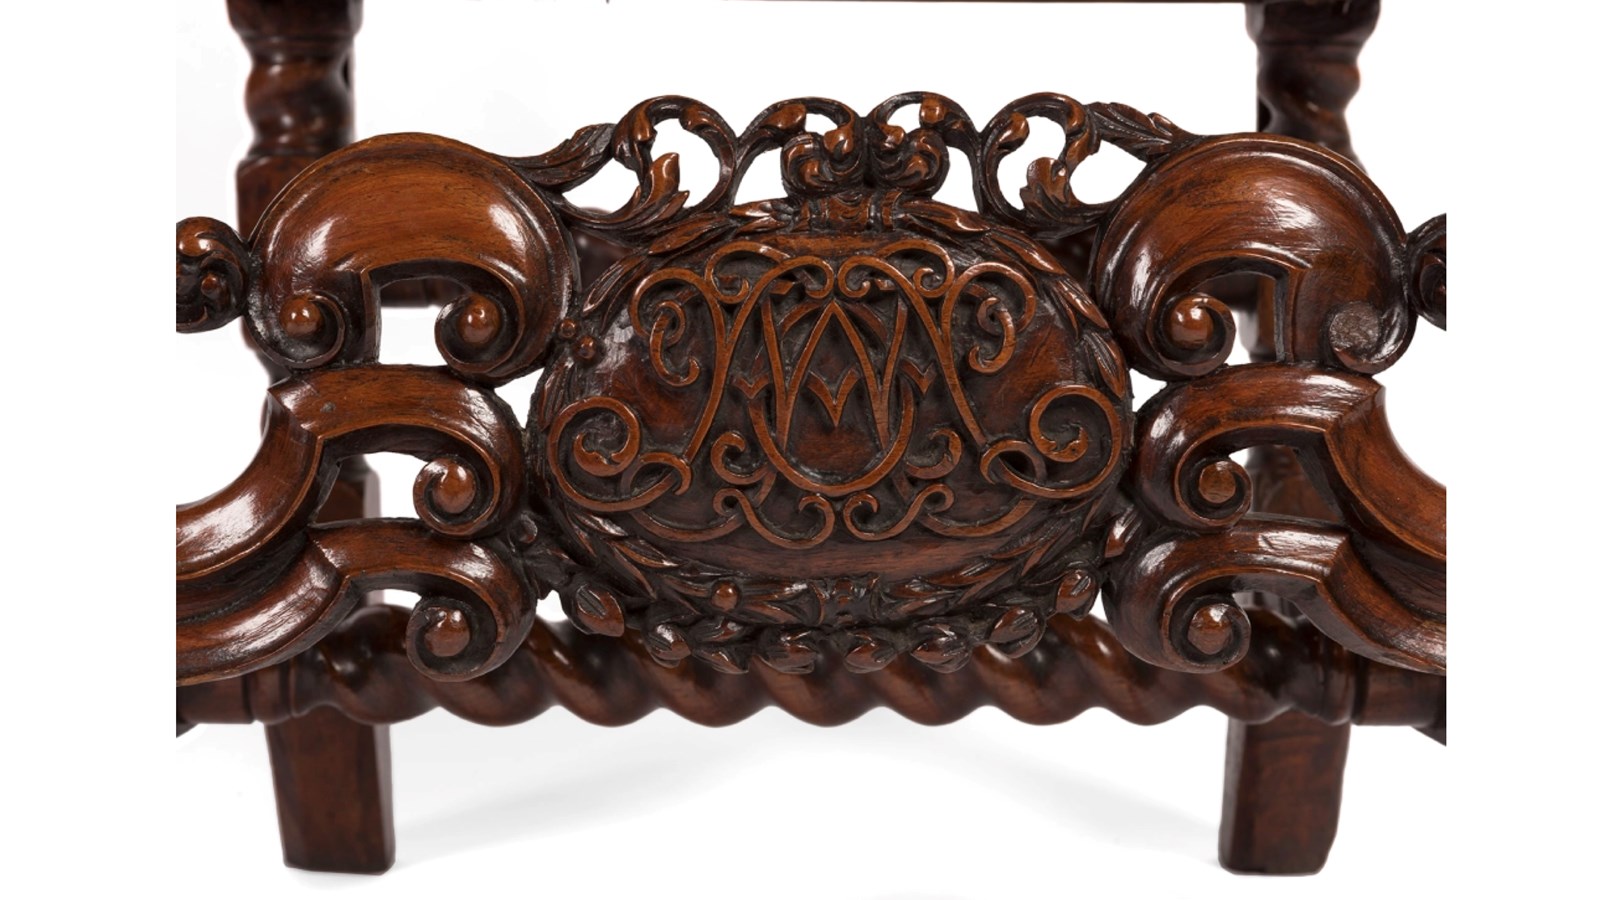 detail shot of a monogram on an ornate dark wooden chair